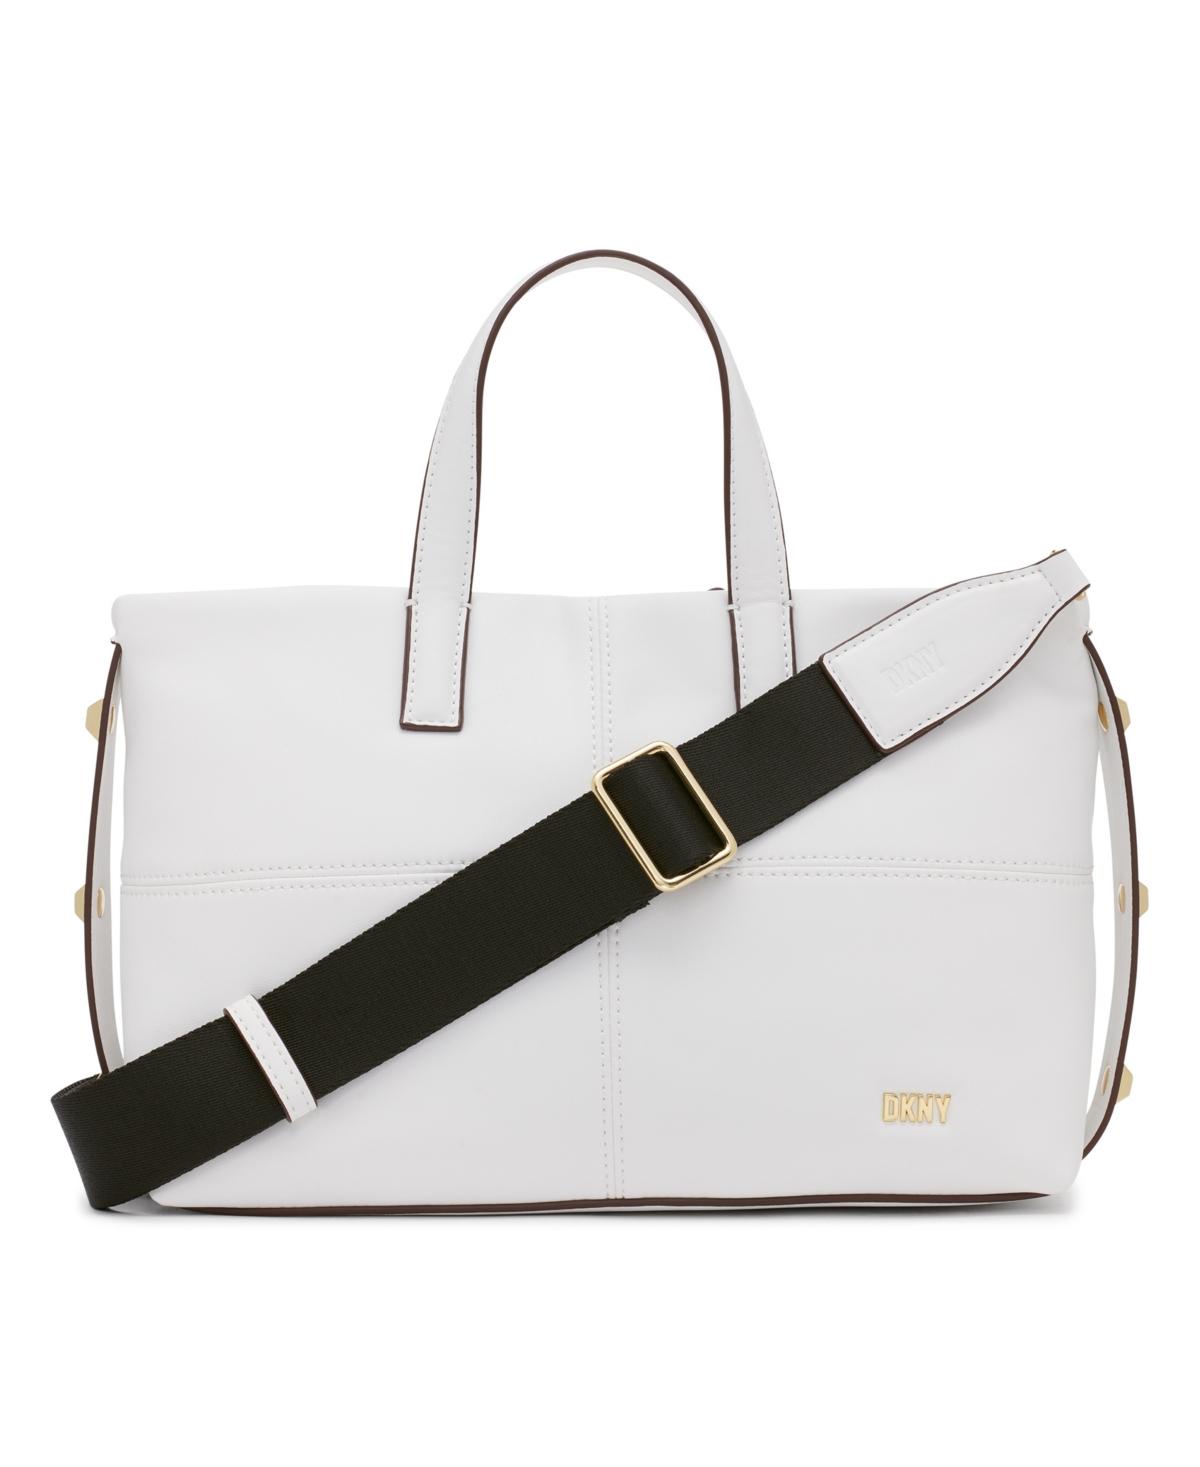 DKNY White With Black Detail Bag